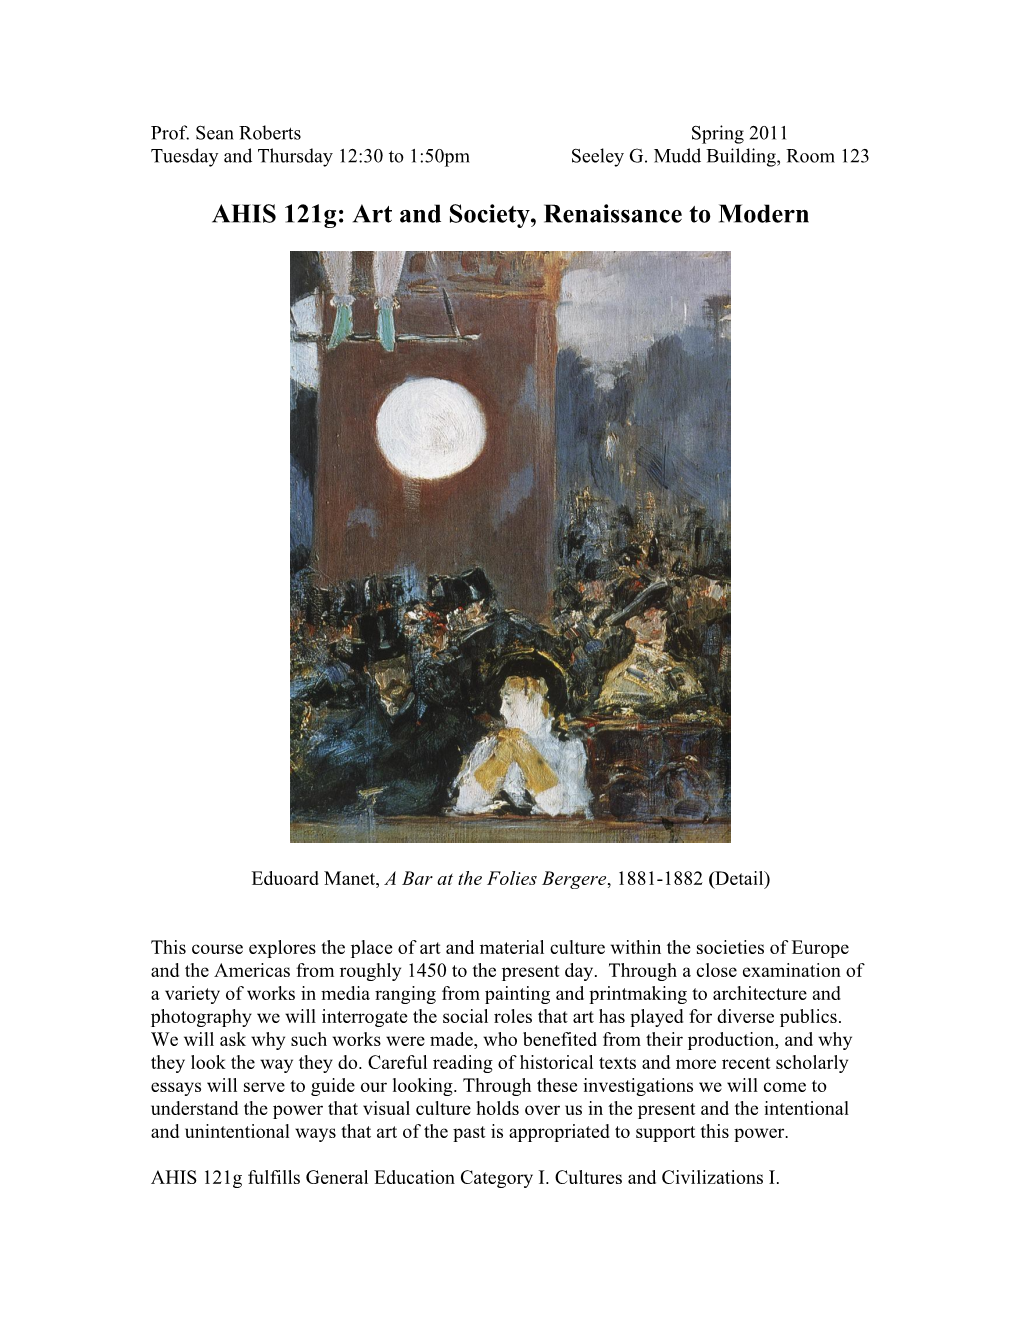 AHIS 121G: Art and Society, Renaissance to Modern